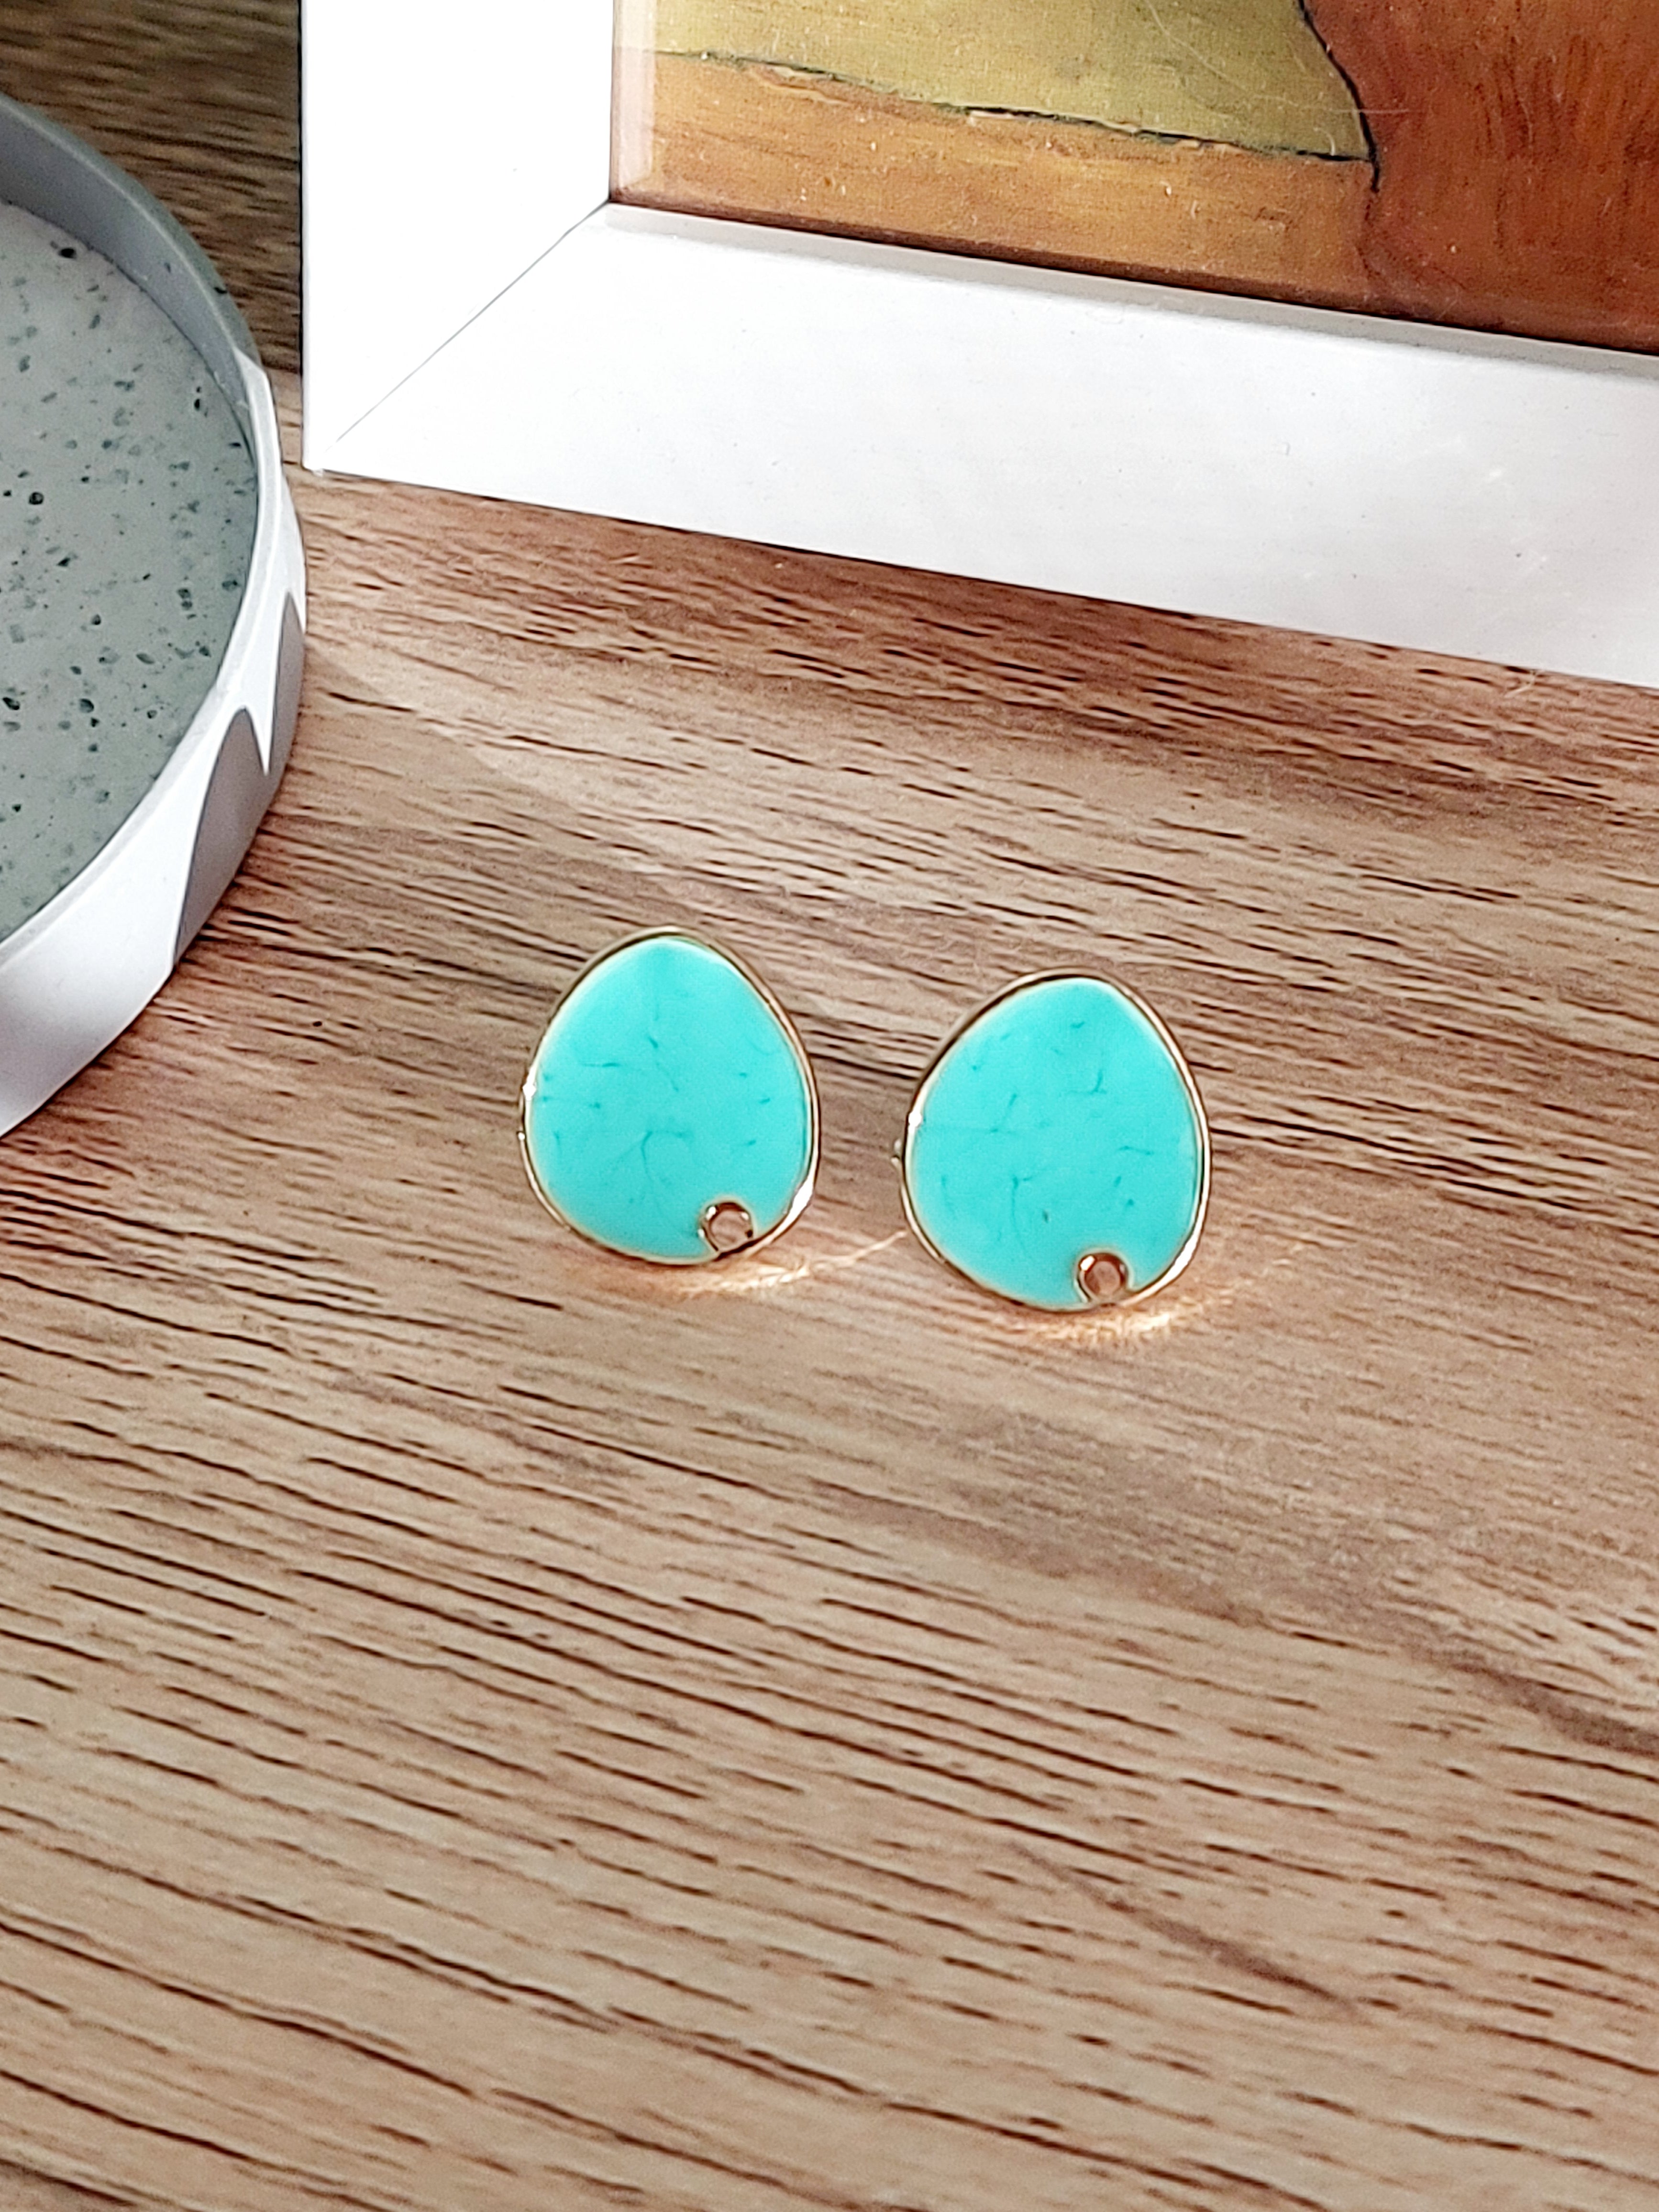 Turquoise Earrings Findings